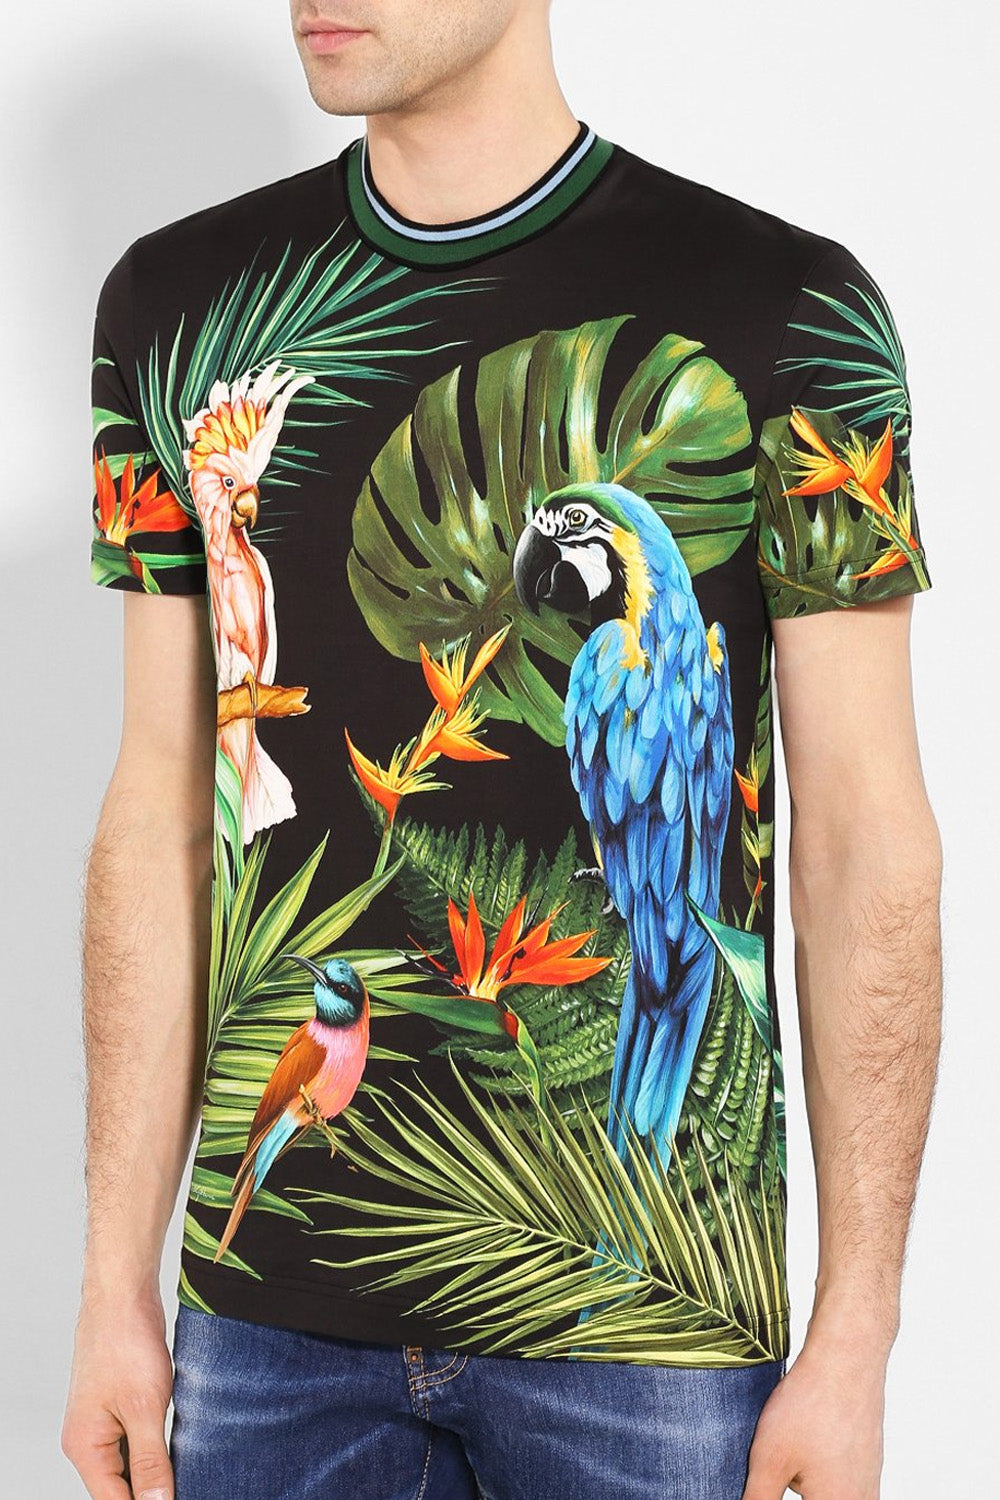 Dolce & Gabbana T-Shirt All Over Print Pattern